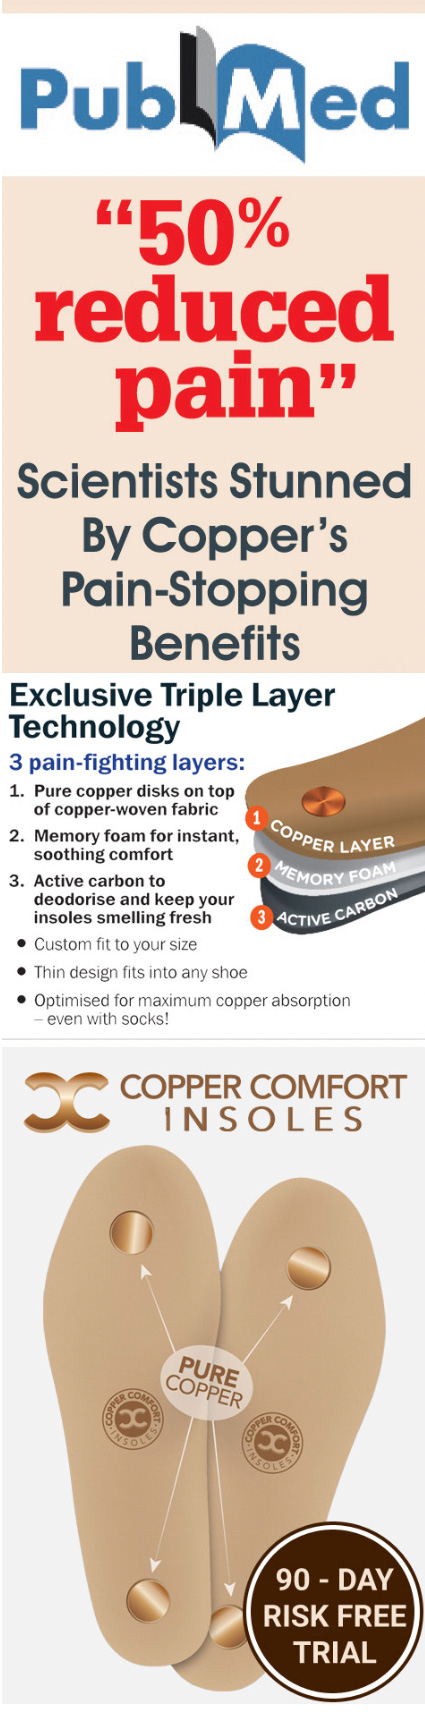 Copper Comfort Insoles. Eliminate Foot Pain